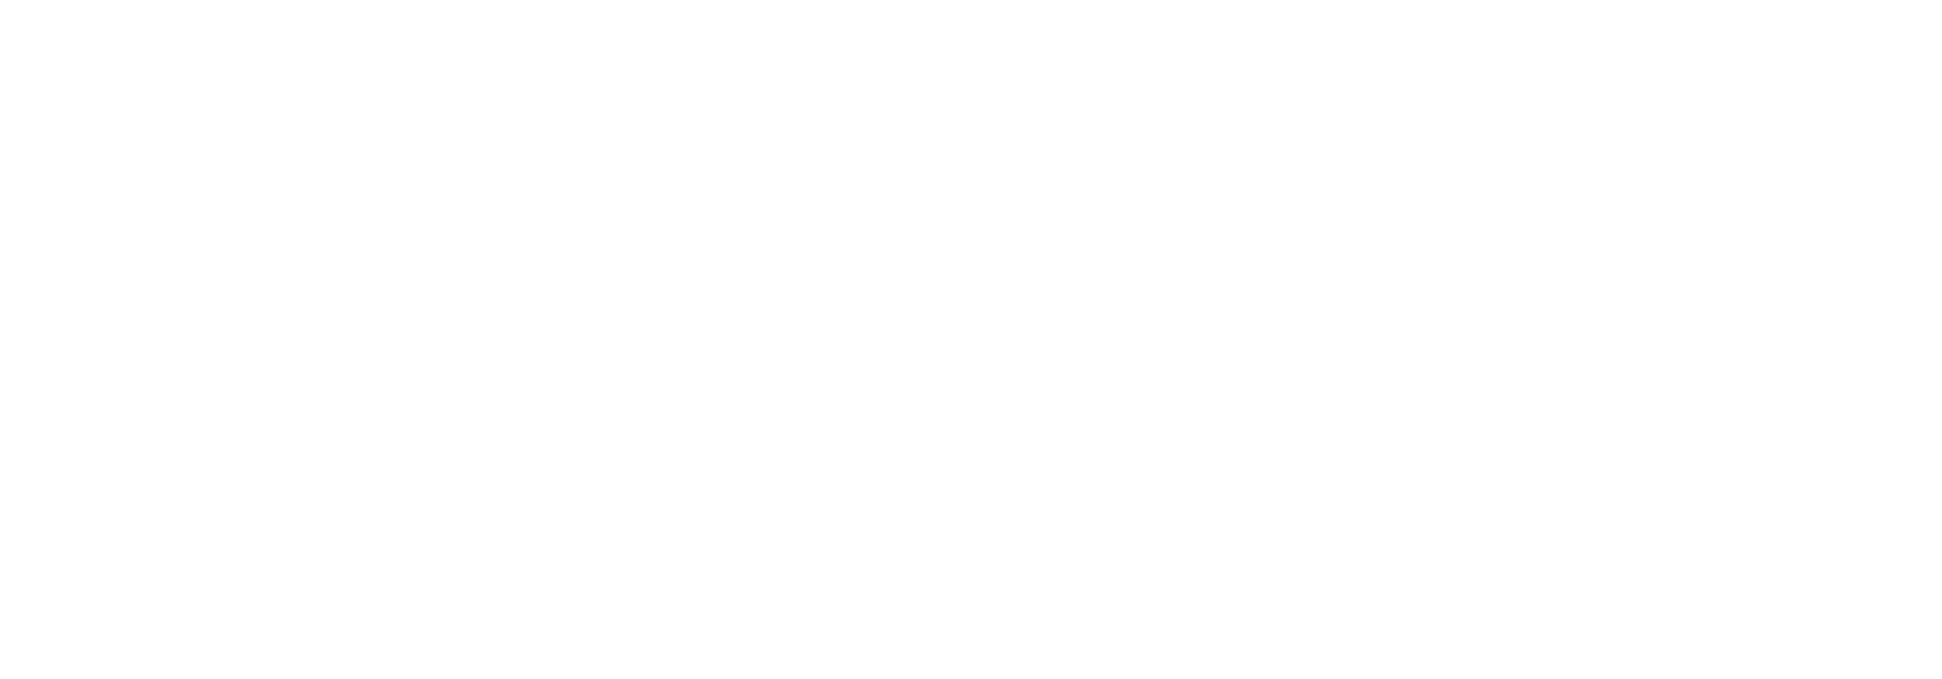 Ciobanu Rechtsanwälte Hannover - Logo Weiß